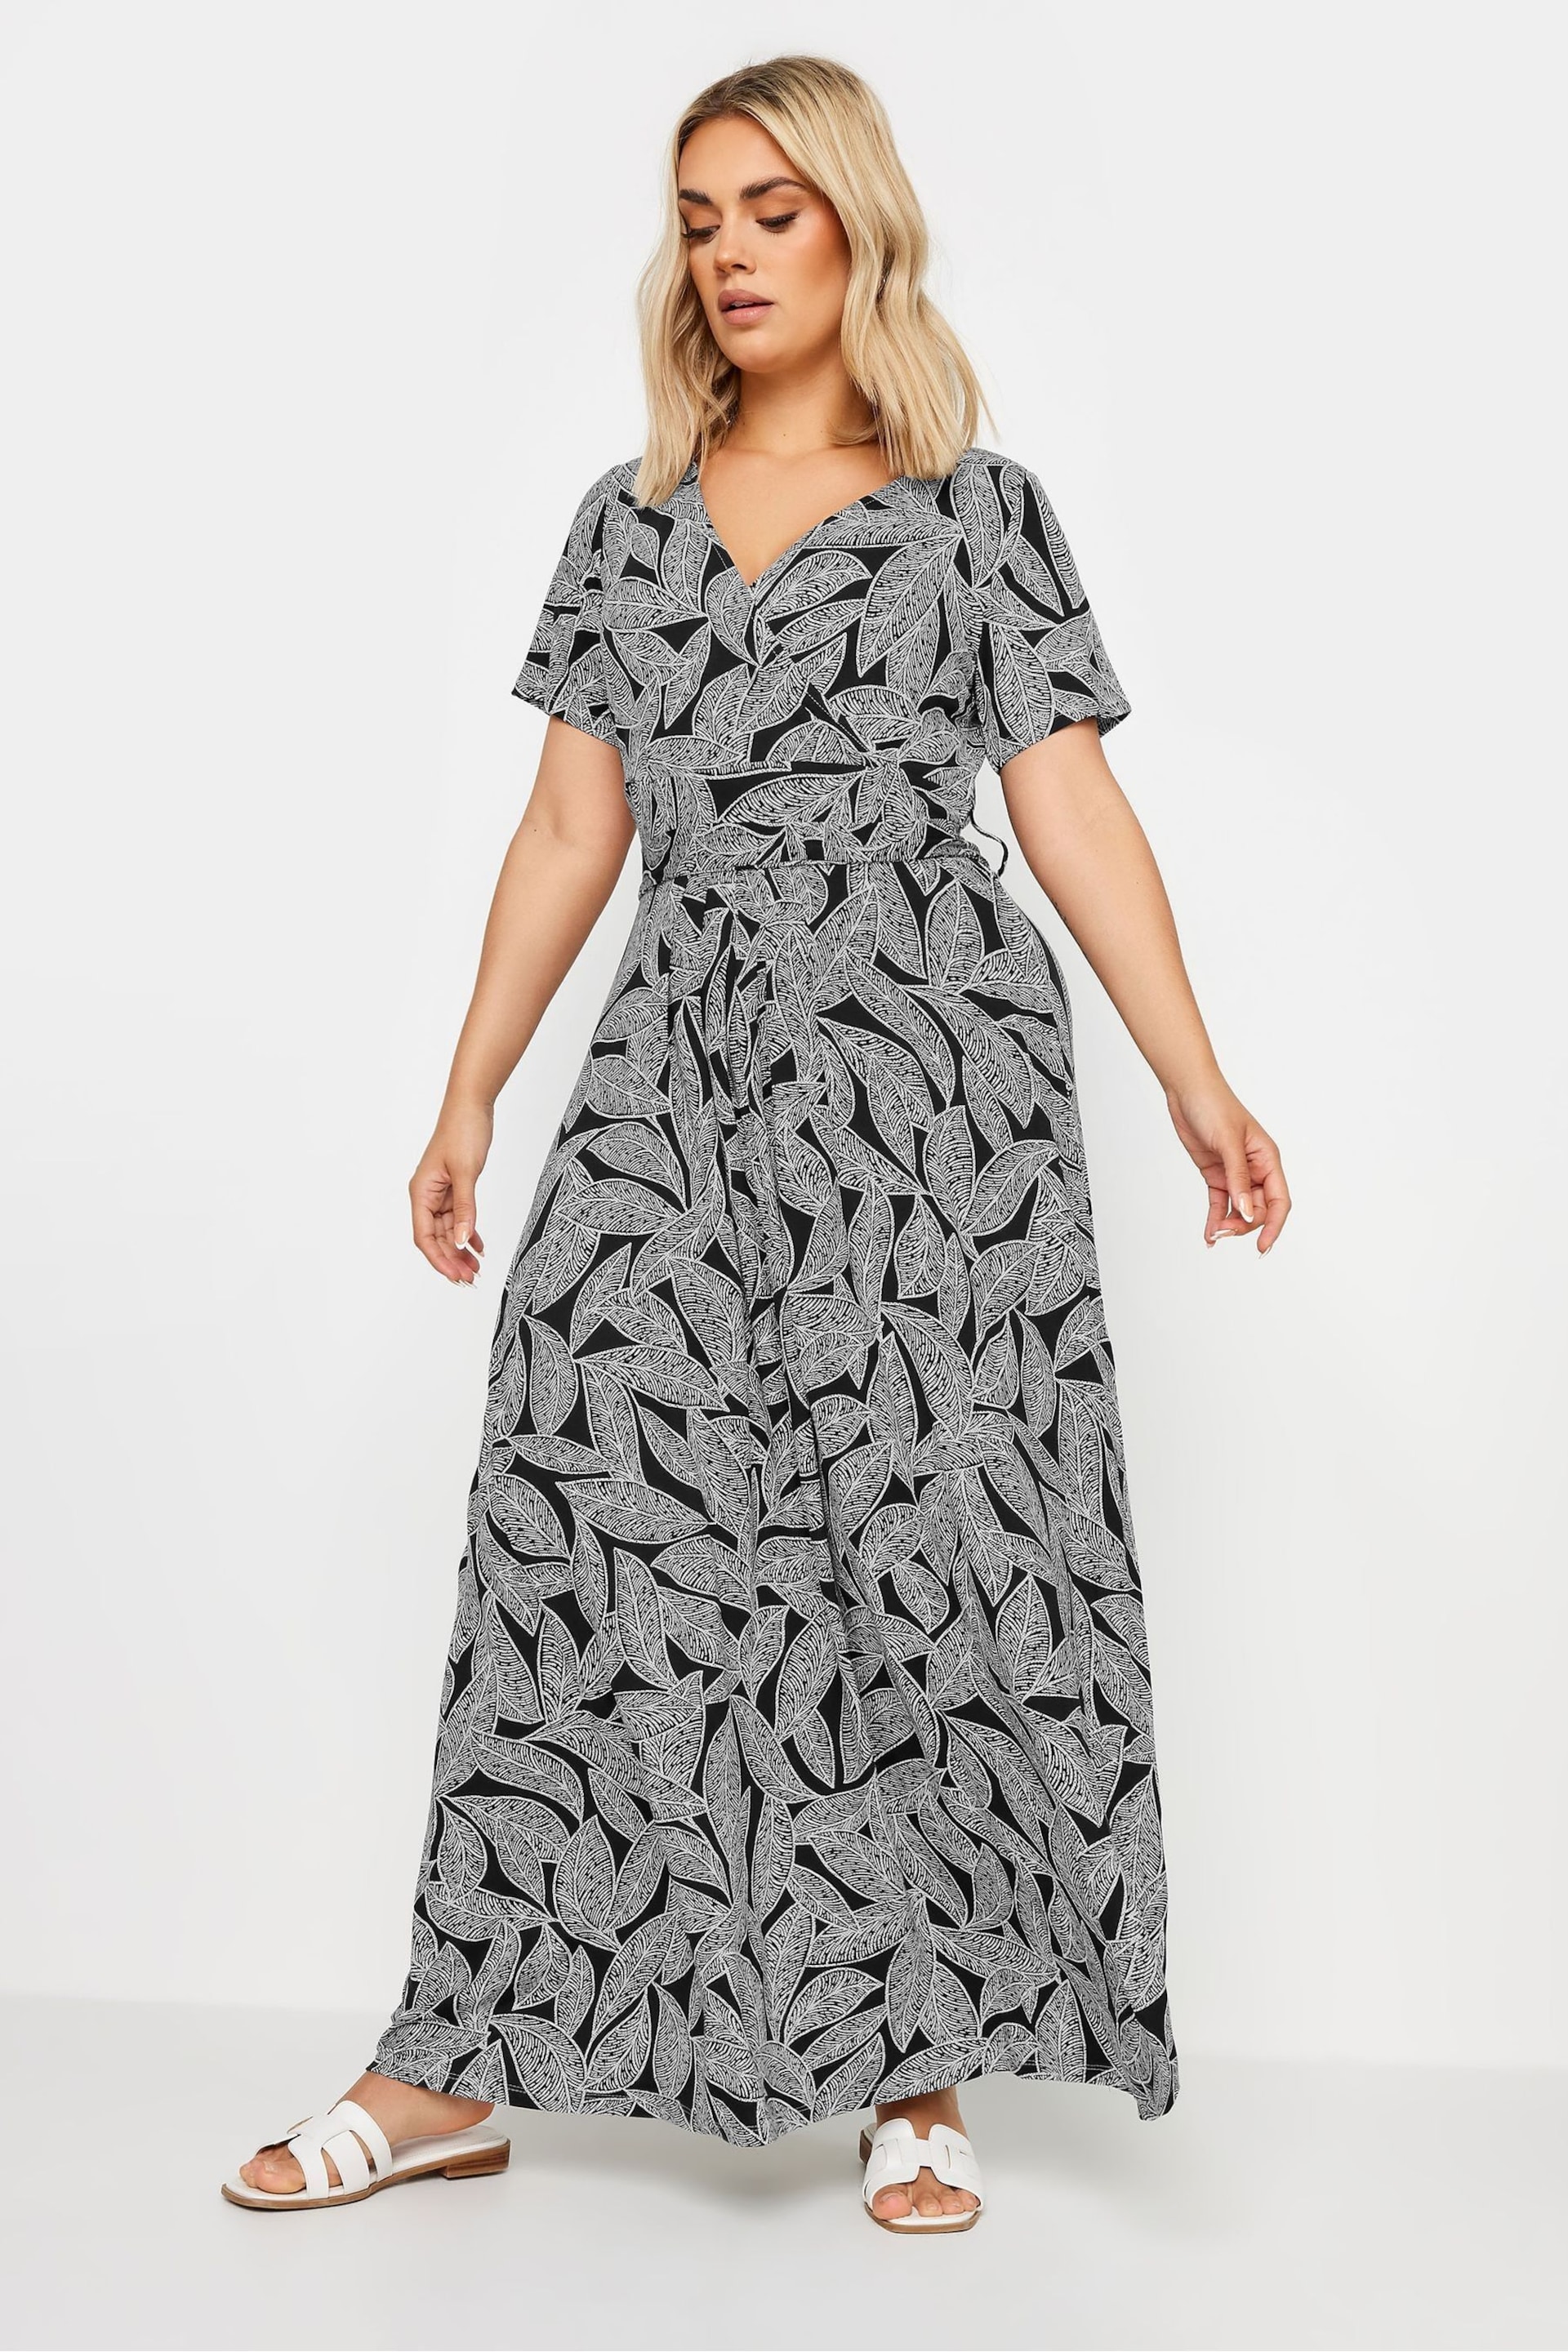 Yours Curve Black Leaf Print Tie Maxi Dress - Image 1 of 5